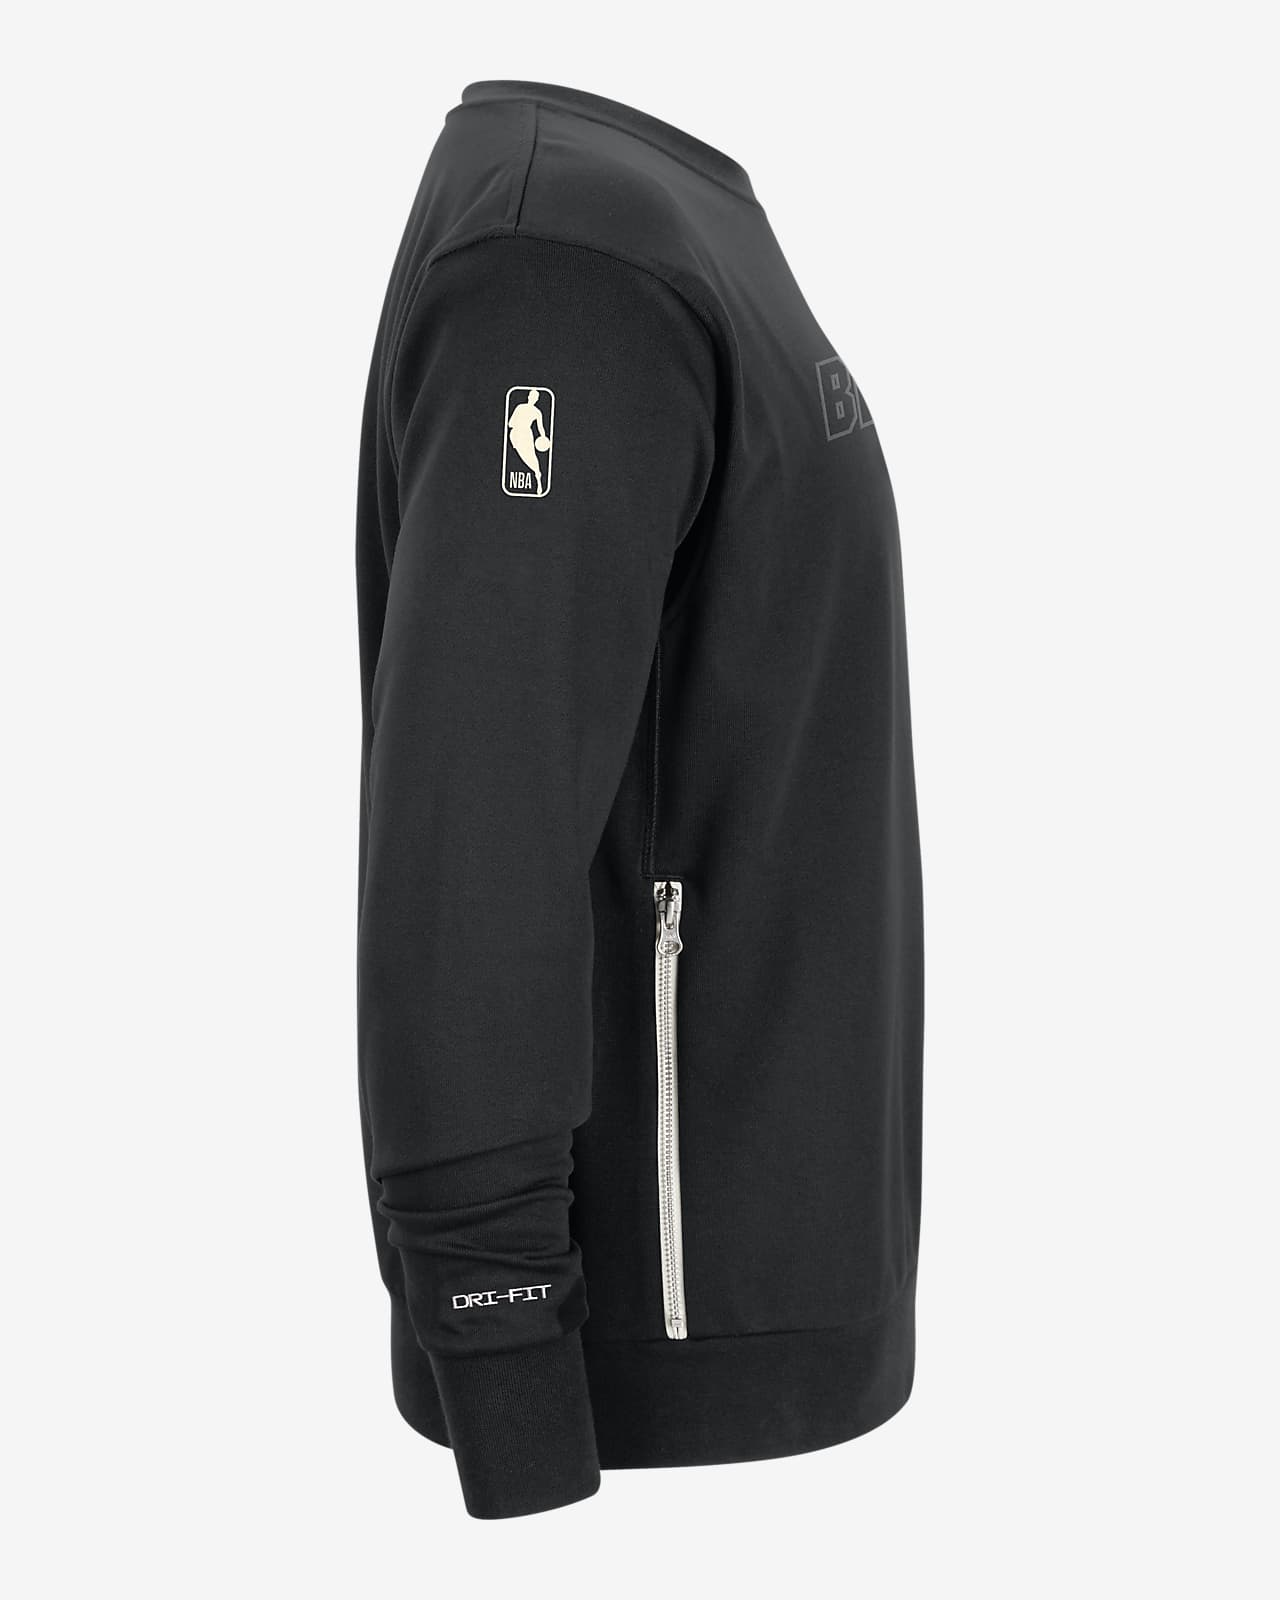 Nike Men's Portland Trail Blazers Black Fleece Pullover Hoodie, Large